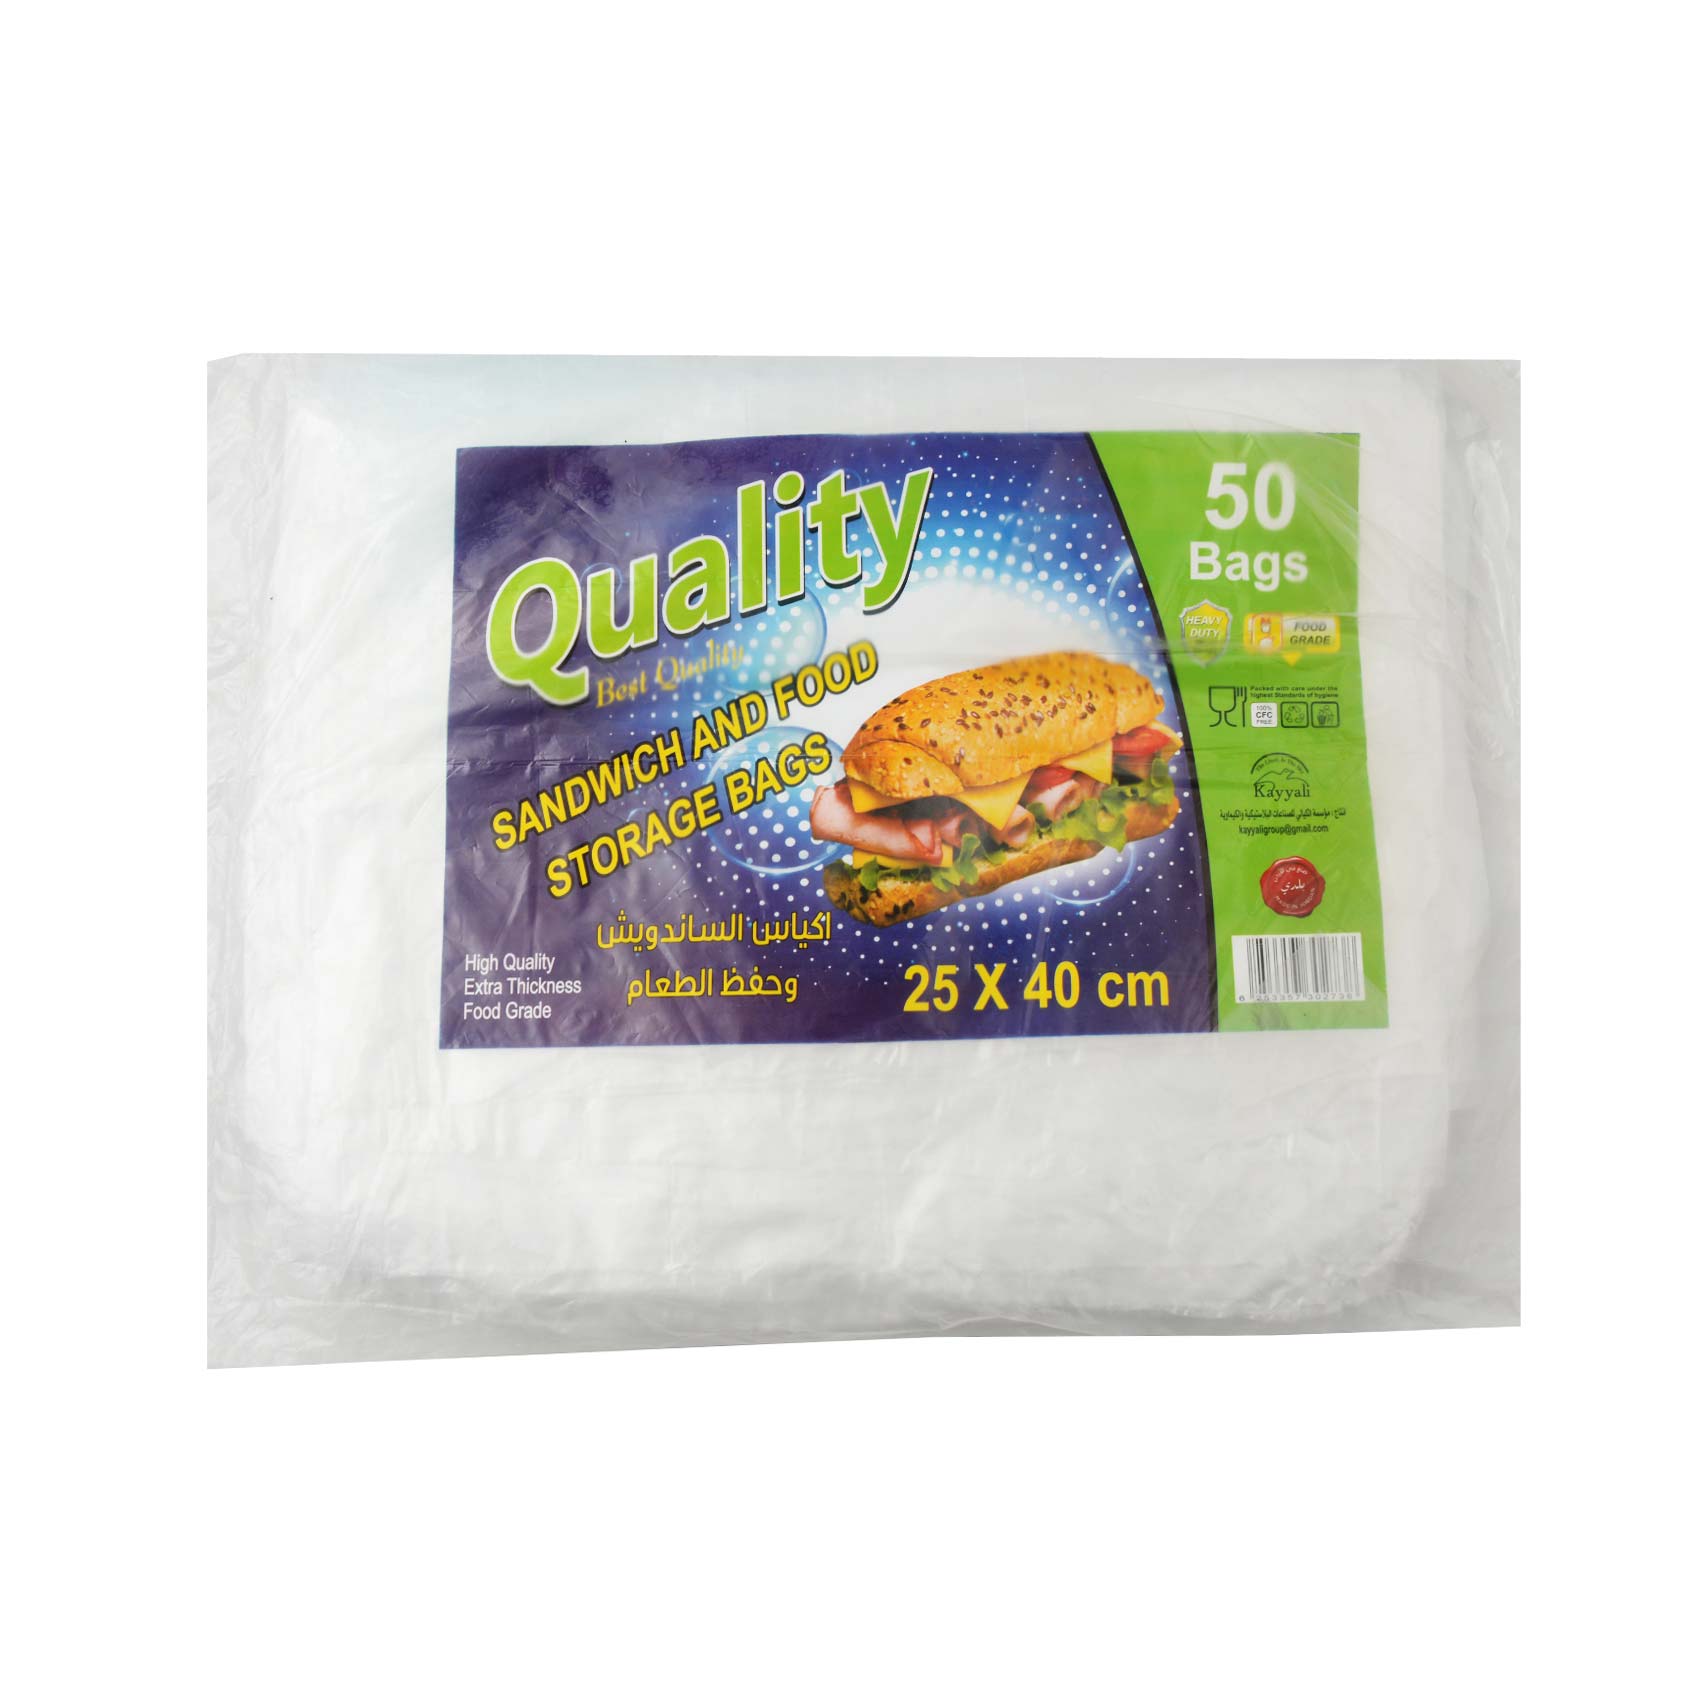 Quality Sandwiche Bags 50 25 X 40 Cm